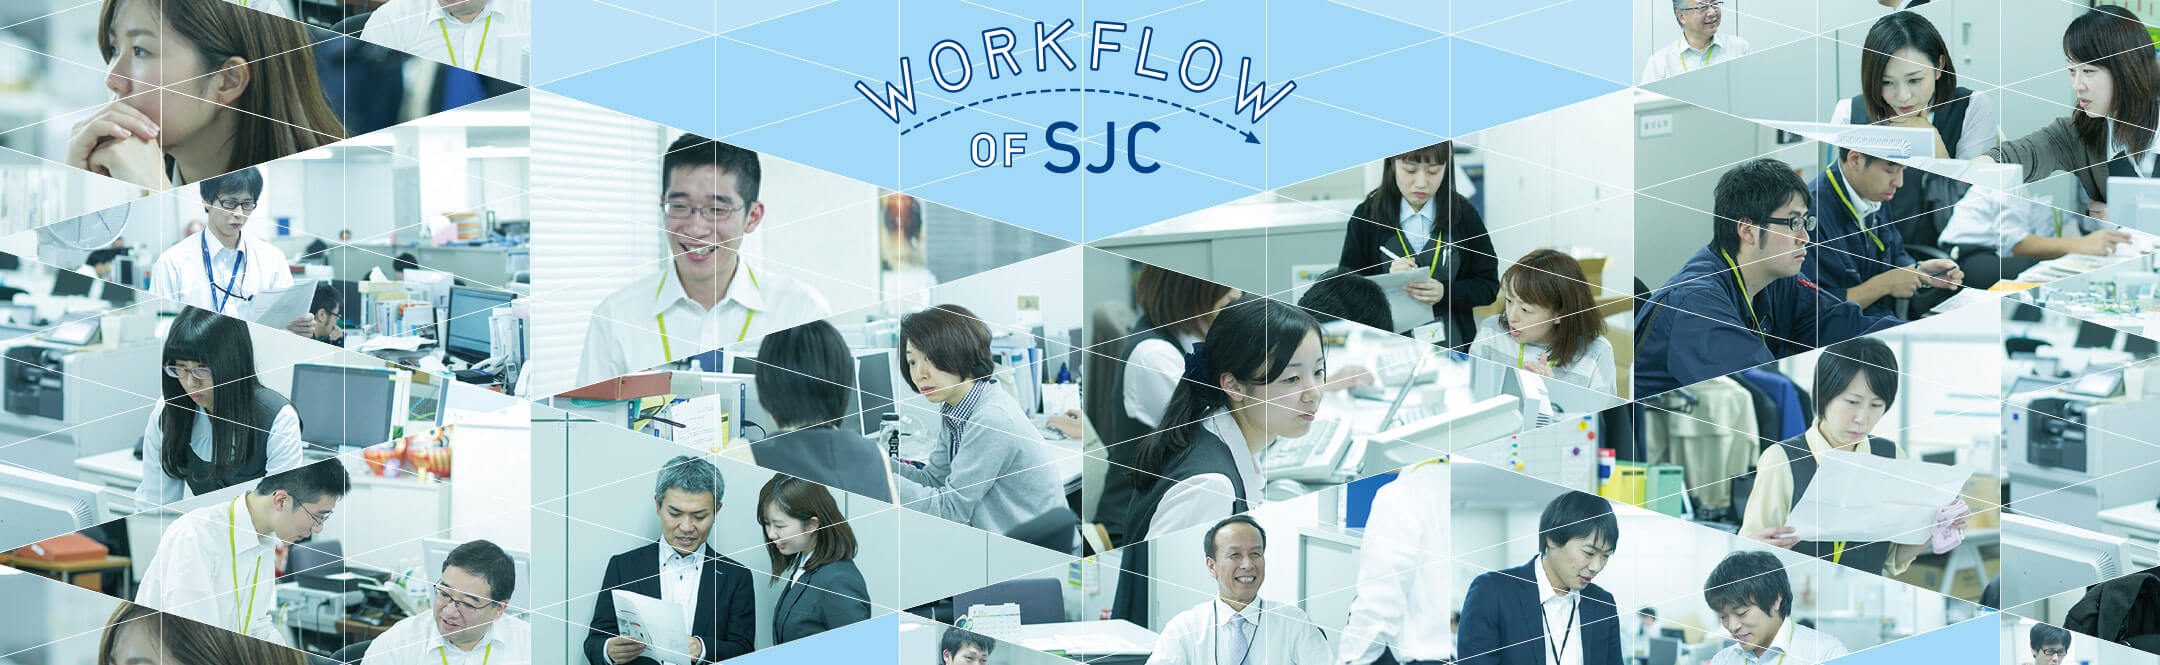 WORKFLOW OF SJC